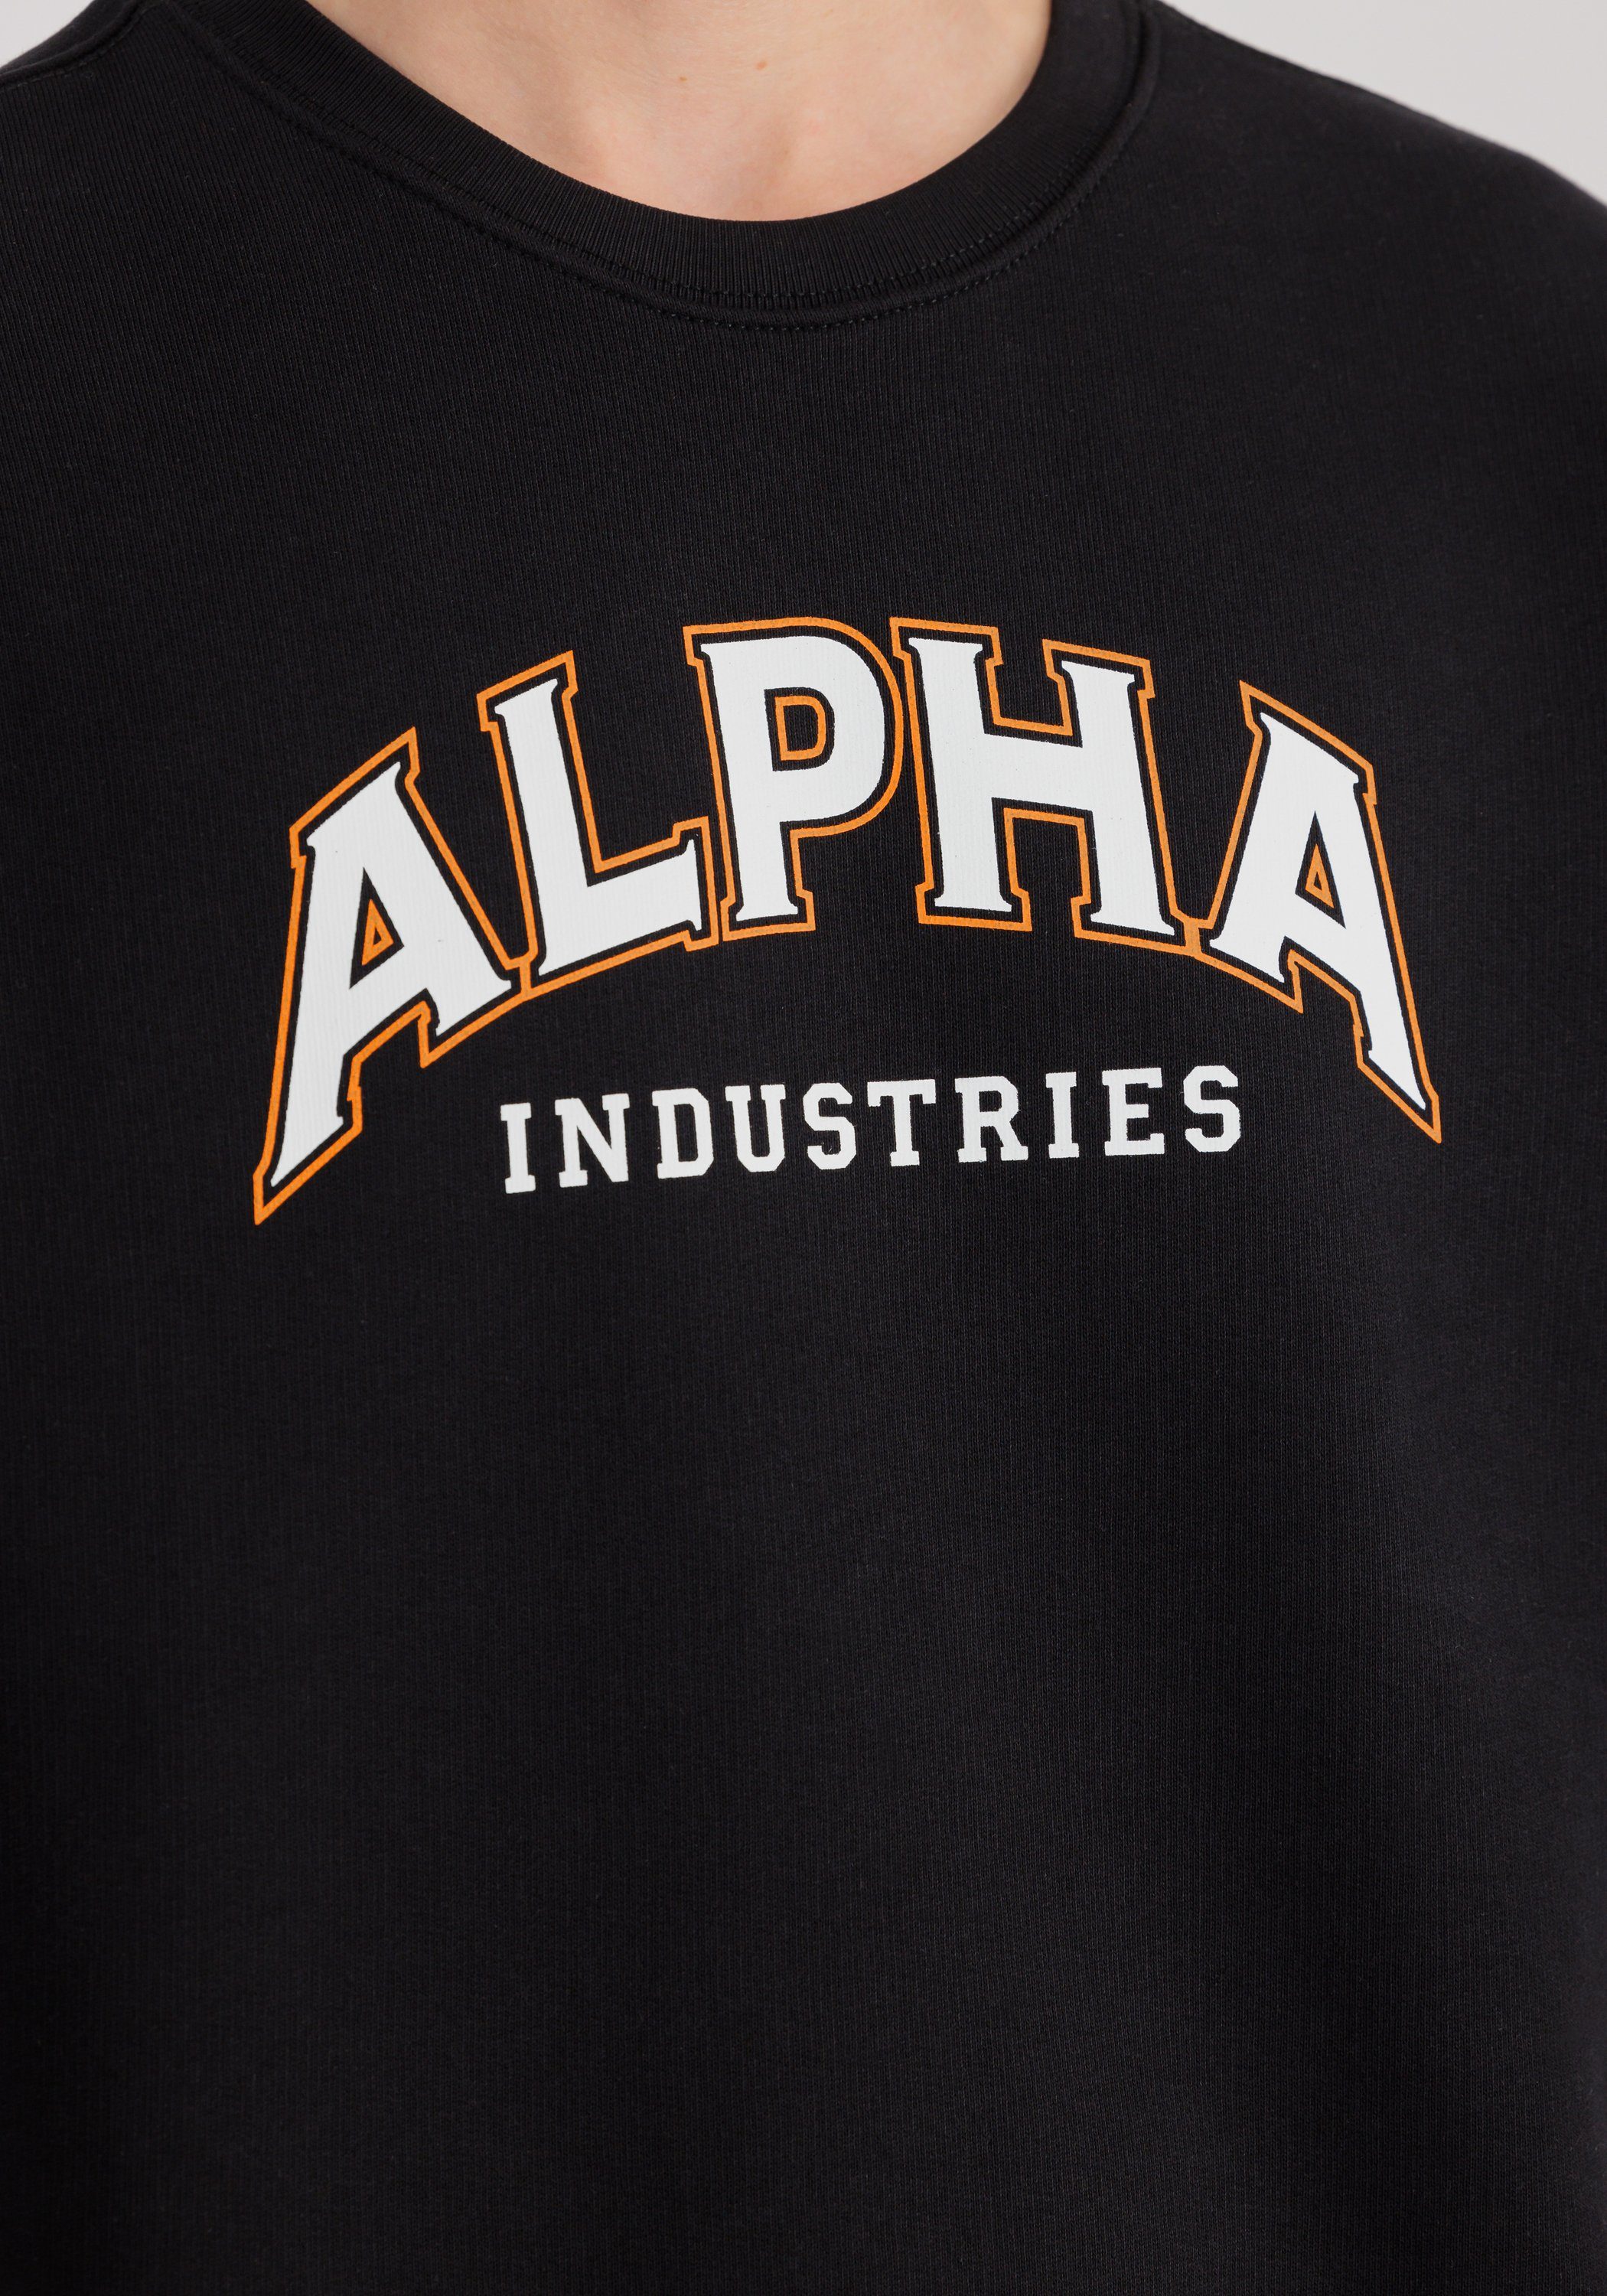 Alpha Industries Sweater Men Sweatshirts College Sweater